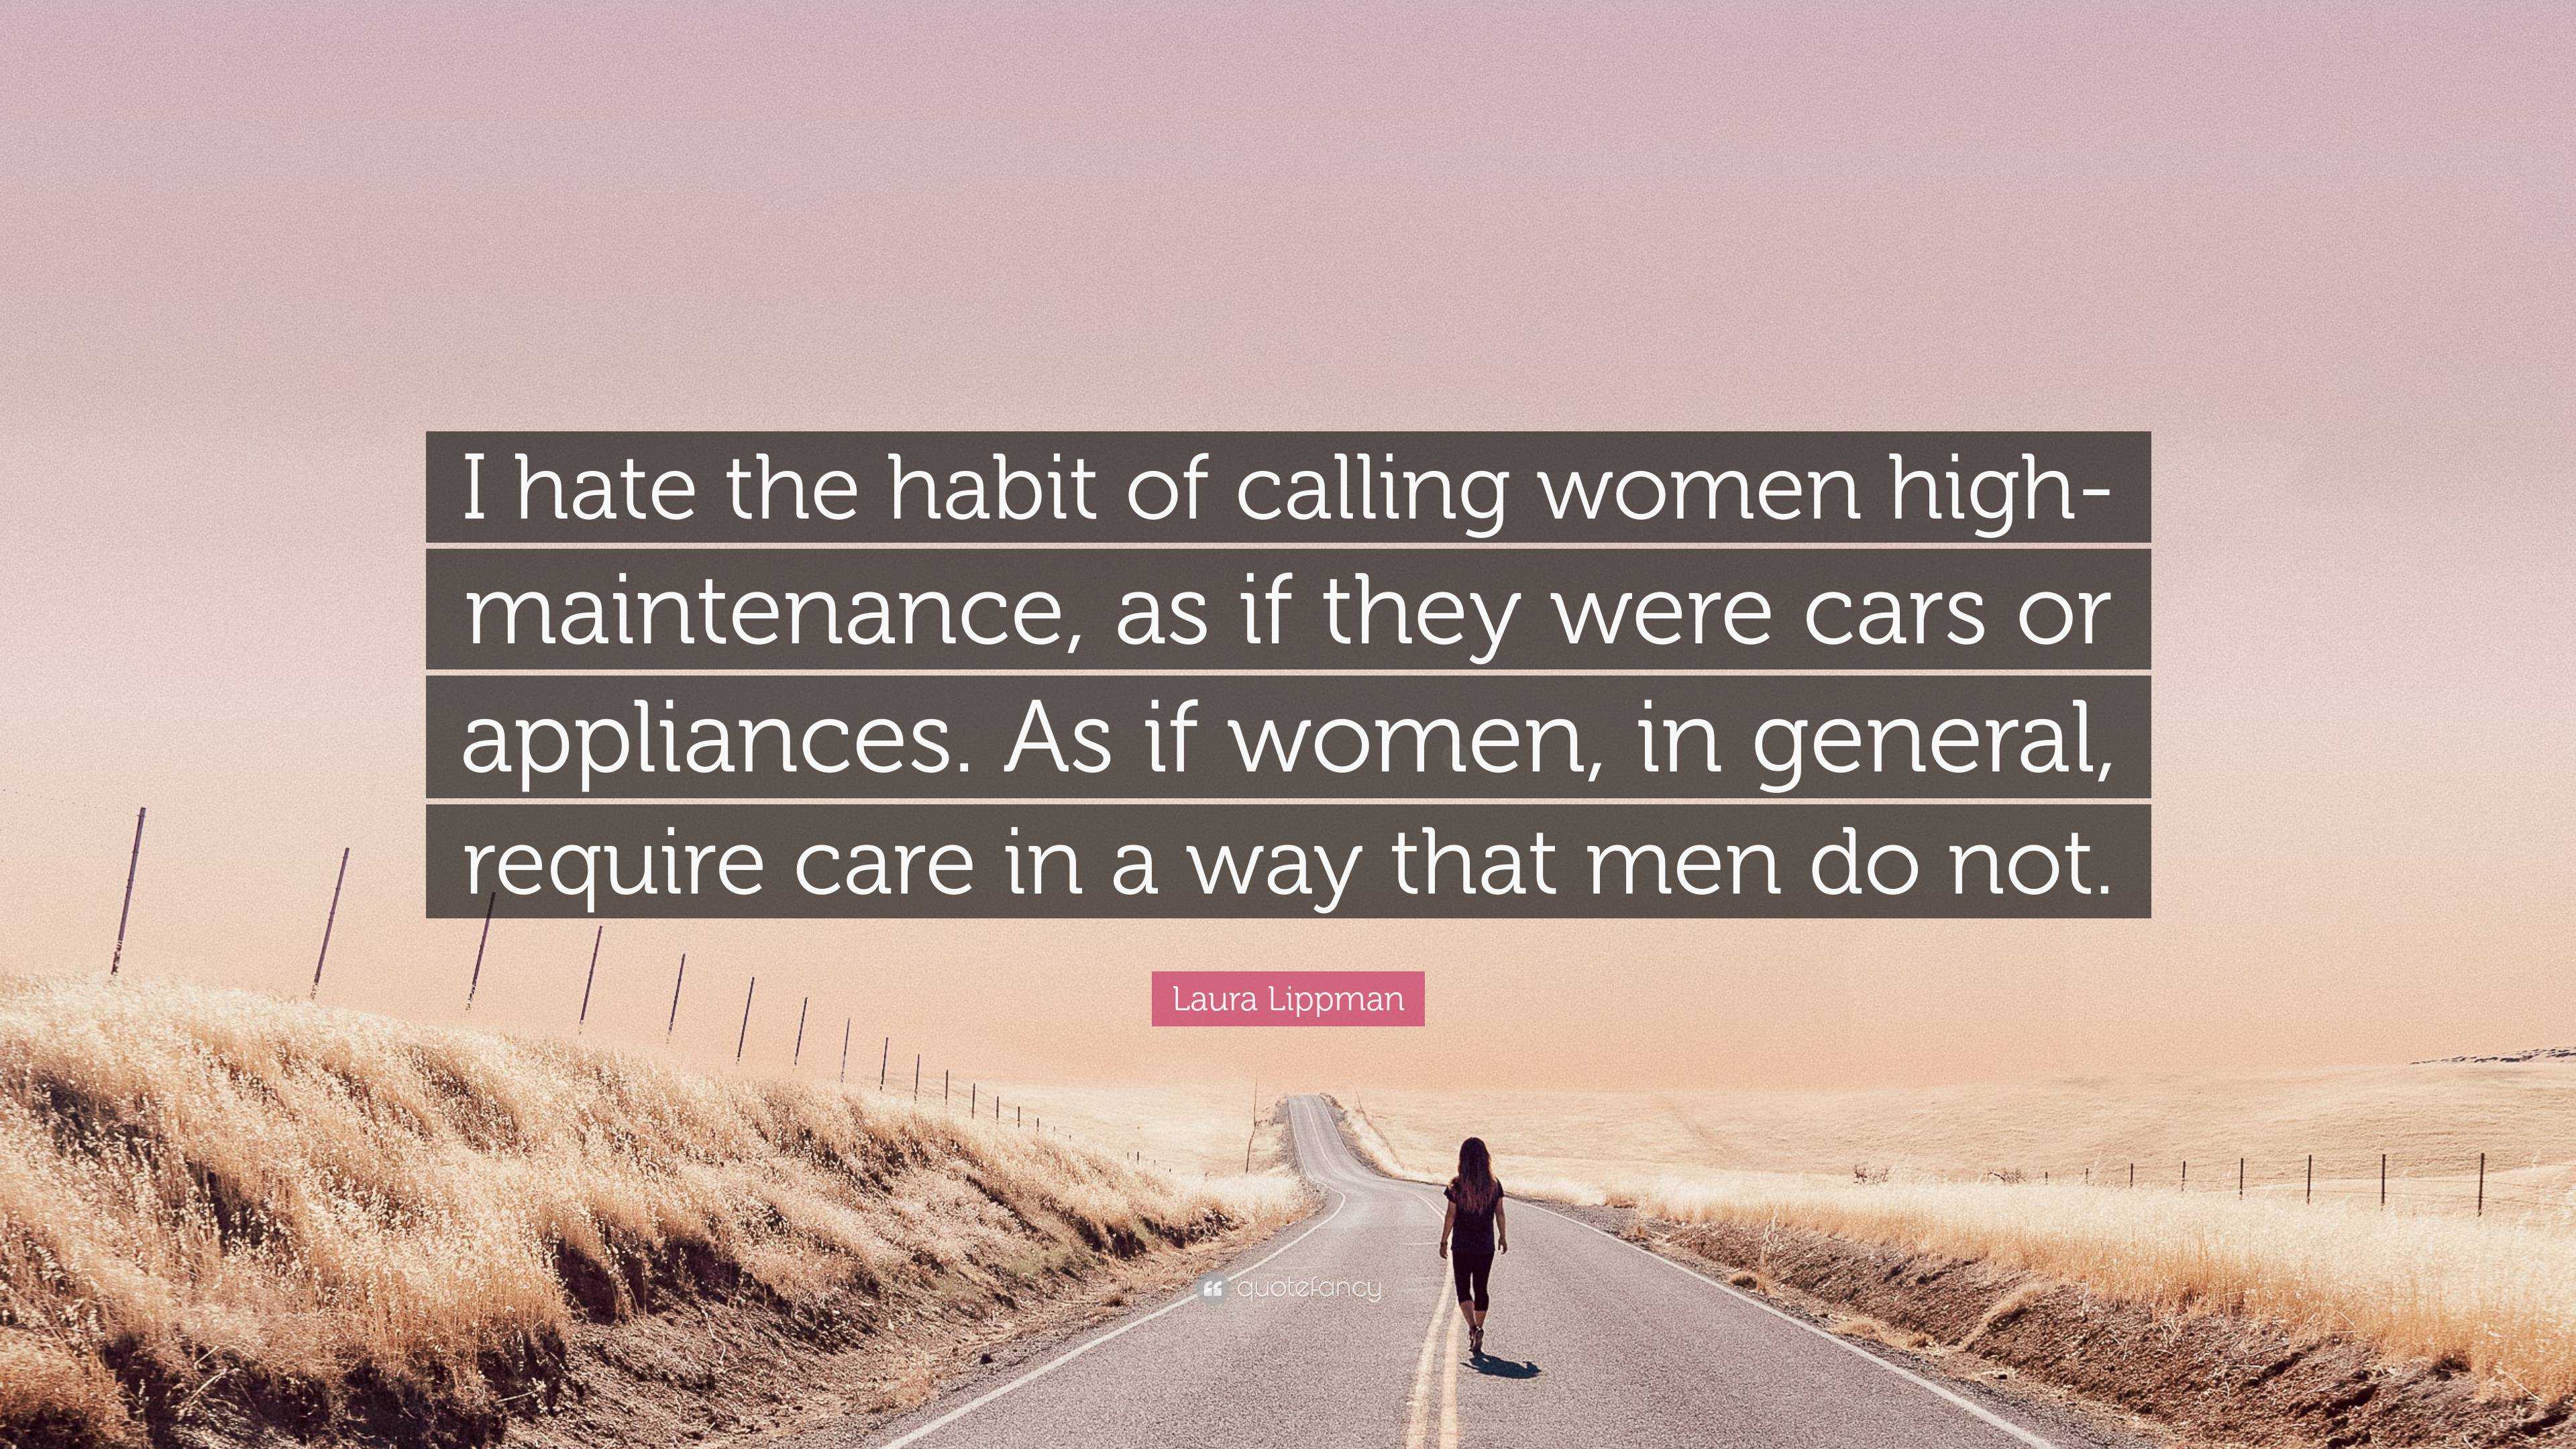 Laura Lippman Quote: “I hate the habit of calling women high ...